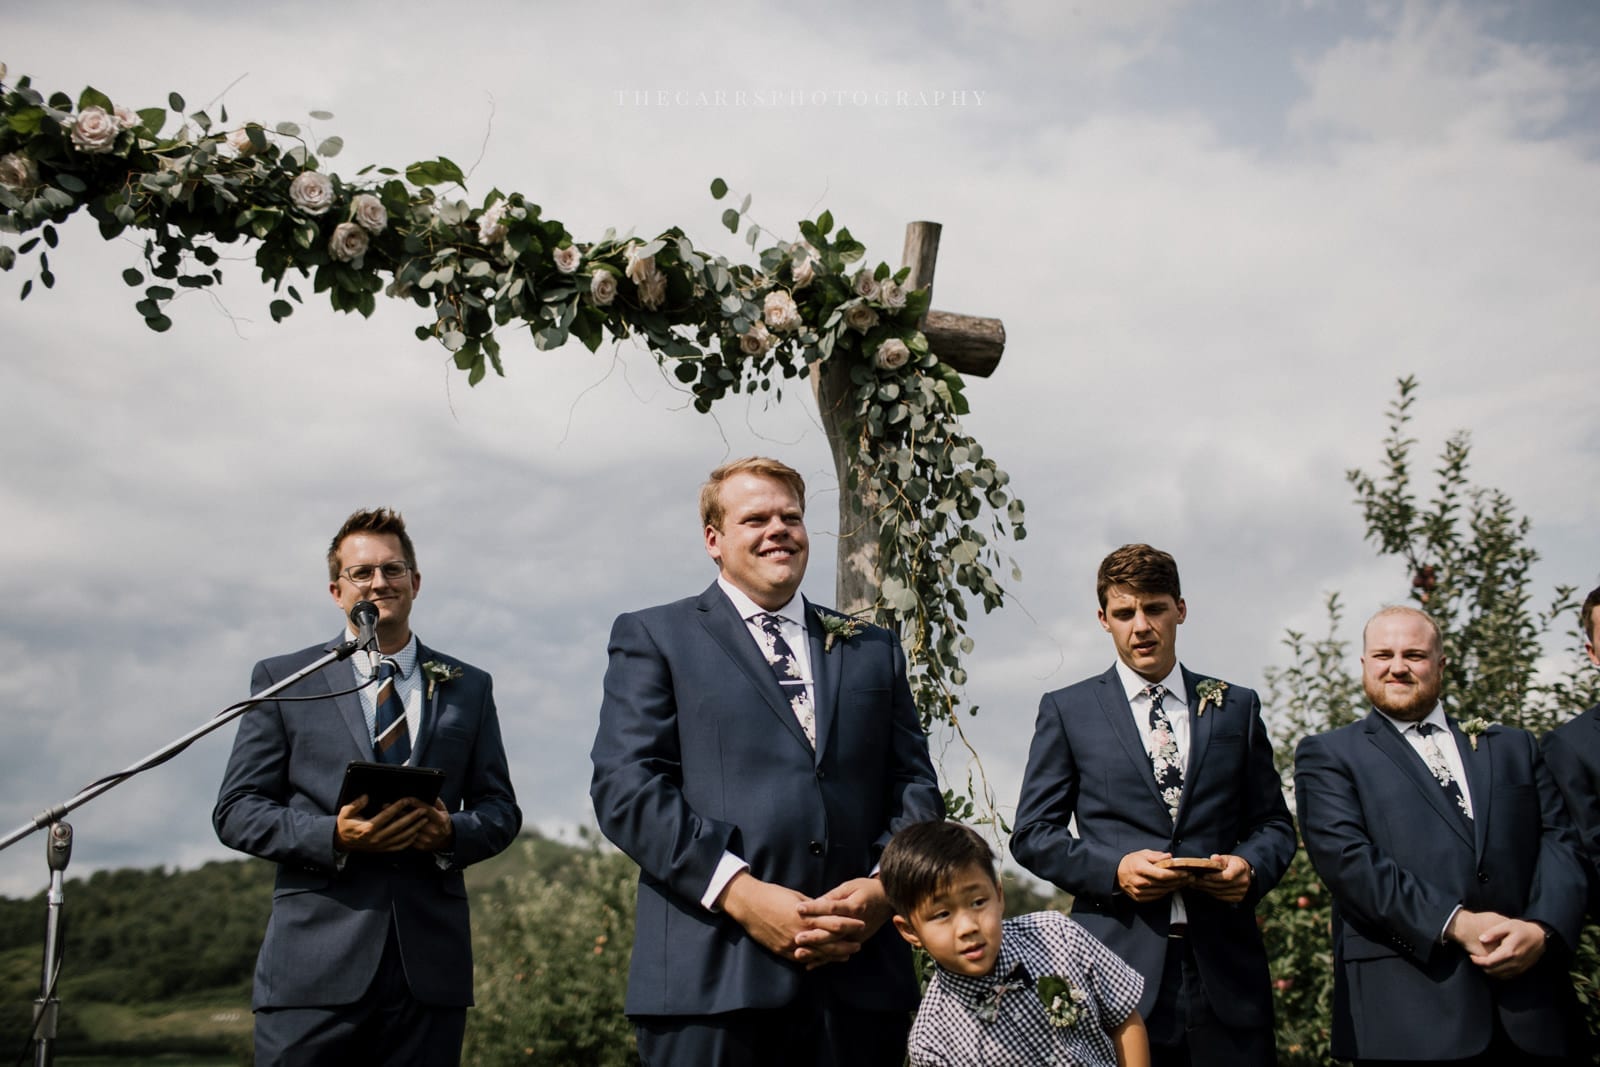 groom waits on bride down the aisle at Eckers Apple Farm Wedding - Destination Photographer